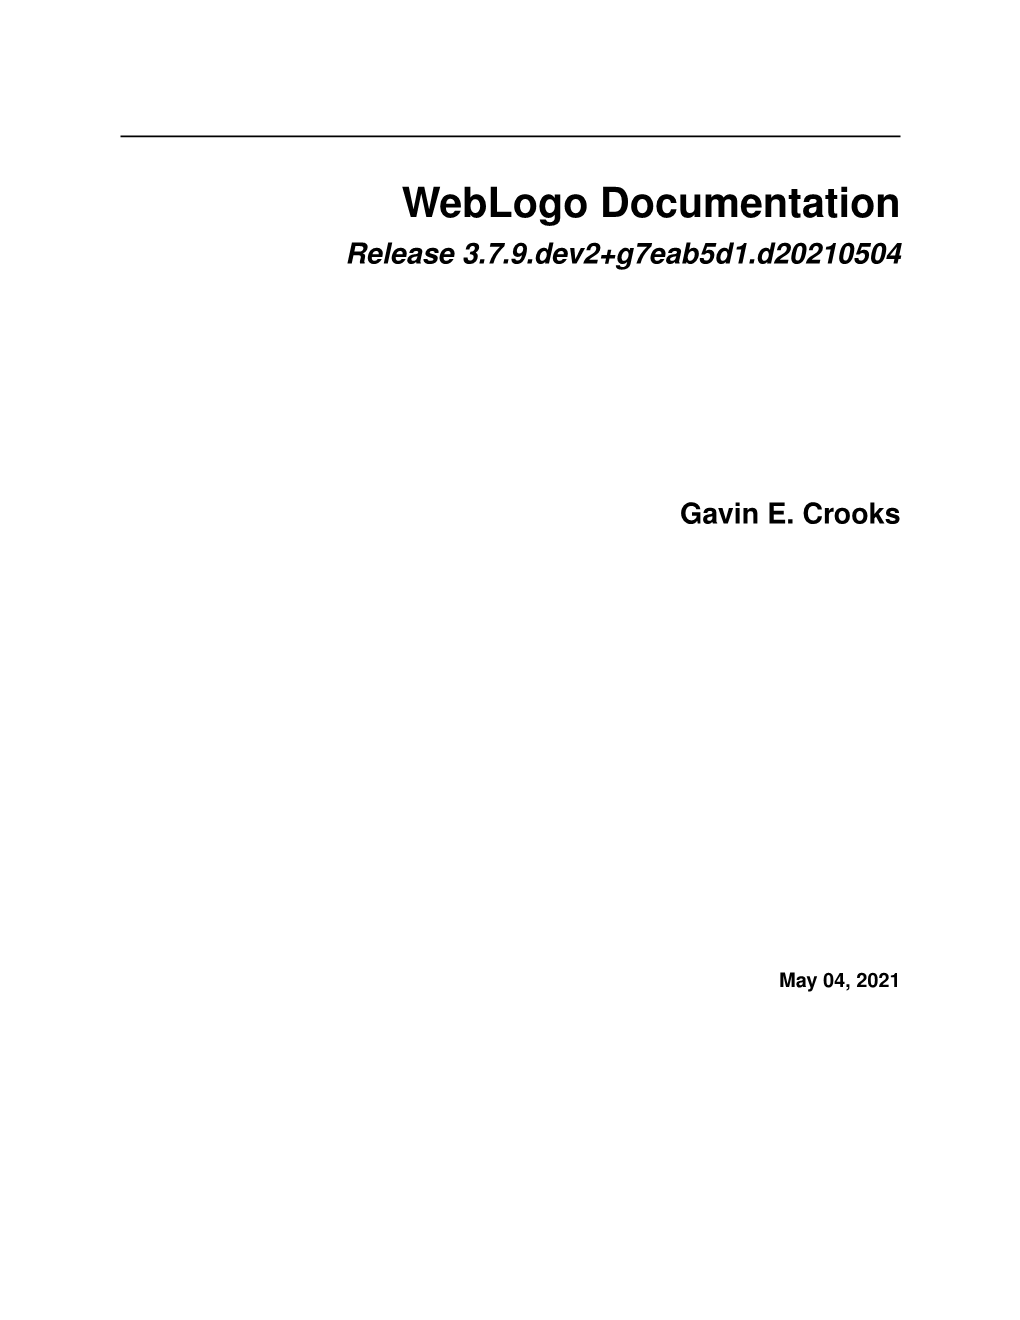 Weblogo Documentation Release 3.7.9.Dev2+G7eab5d1.D20210504